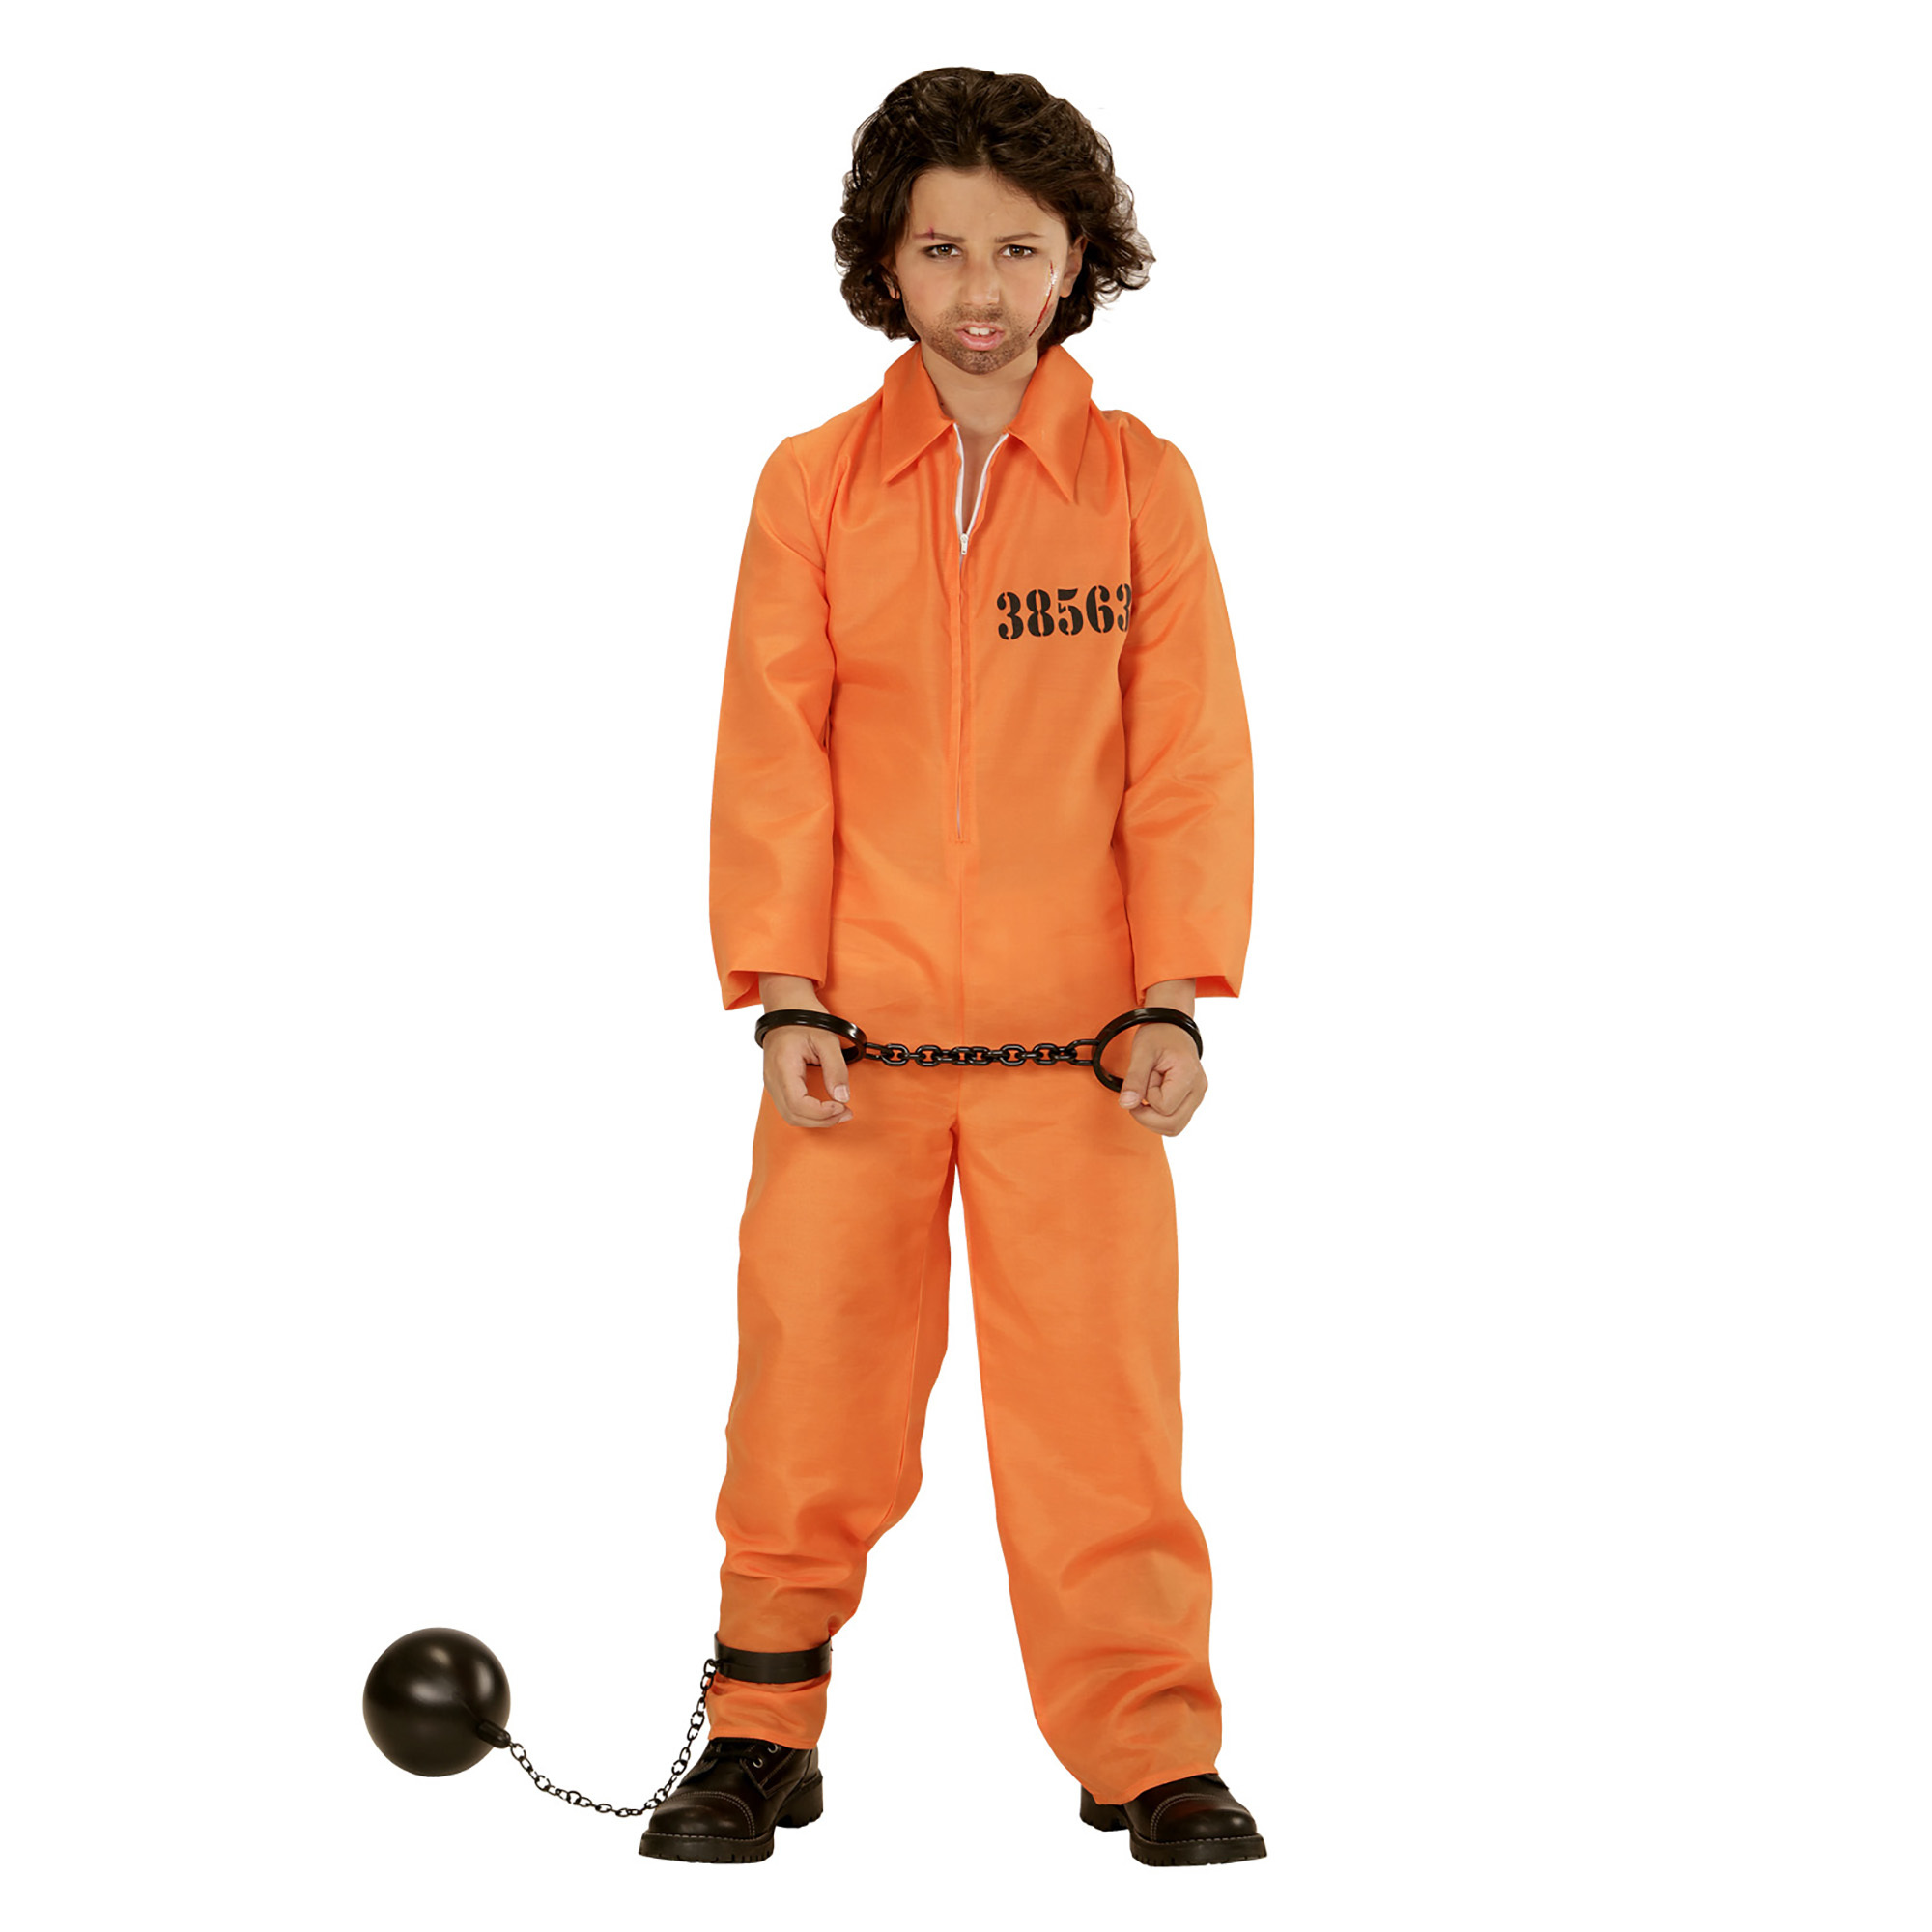 County jail boeven kostuum oranje kind